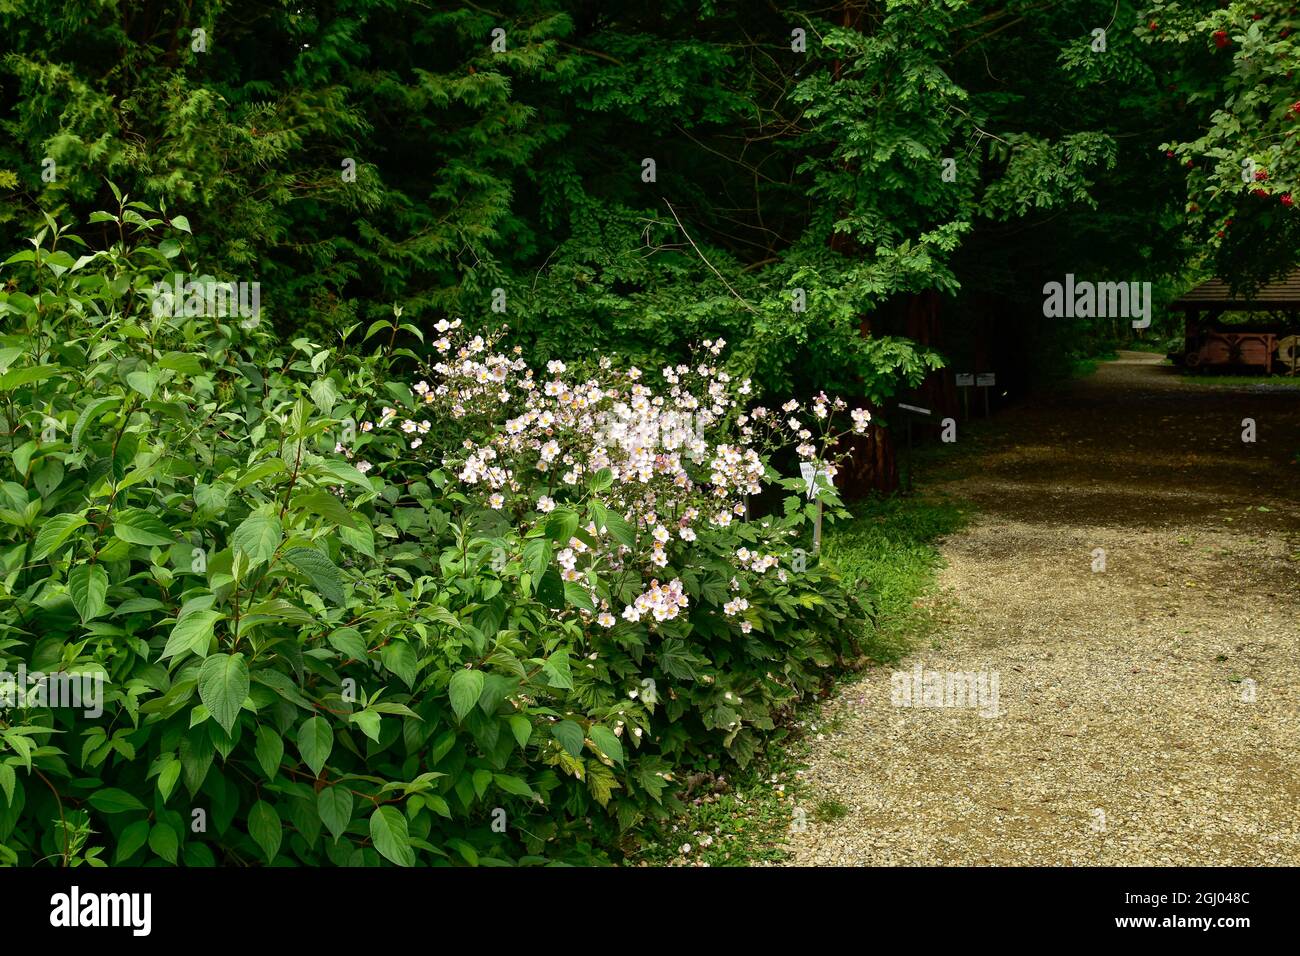 Bolestraszyce arboretum, Poland a beautiful green place, trees, shrubs, ponds, flowers on a summer August day. Stock Photo